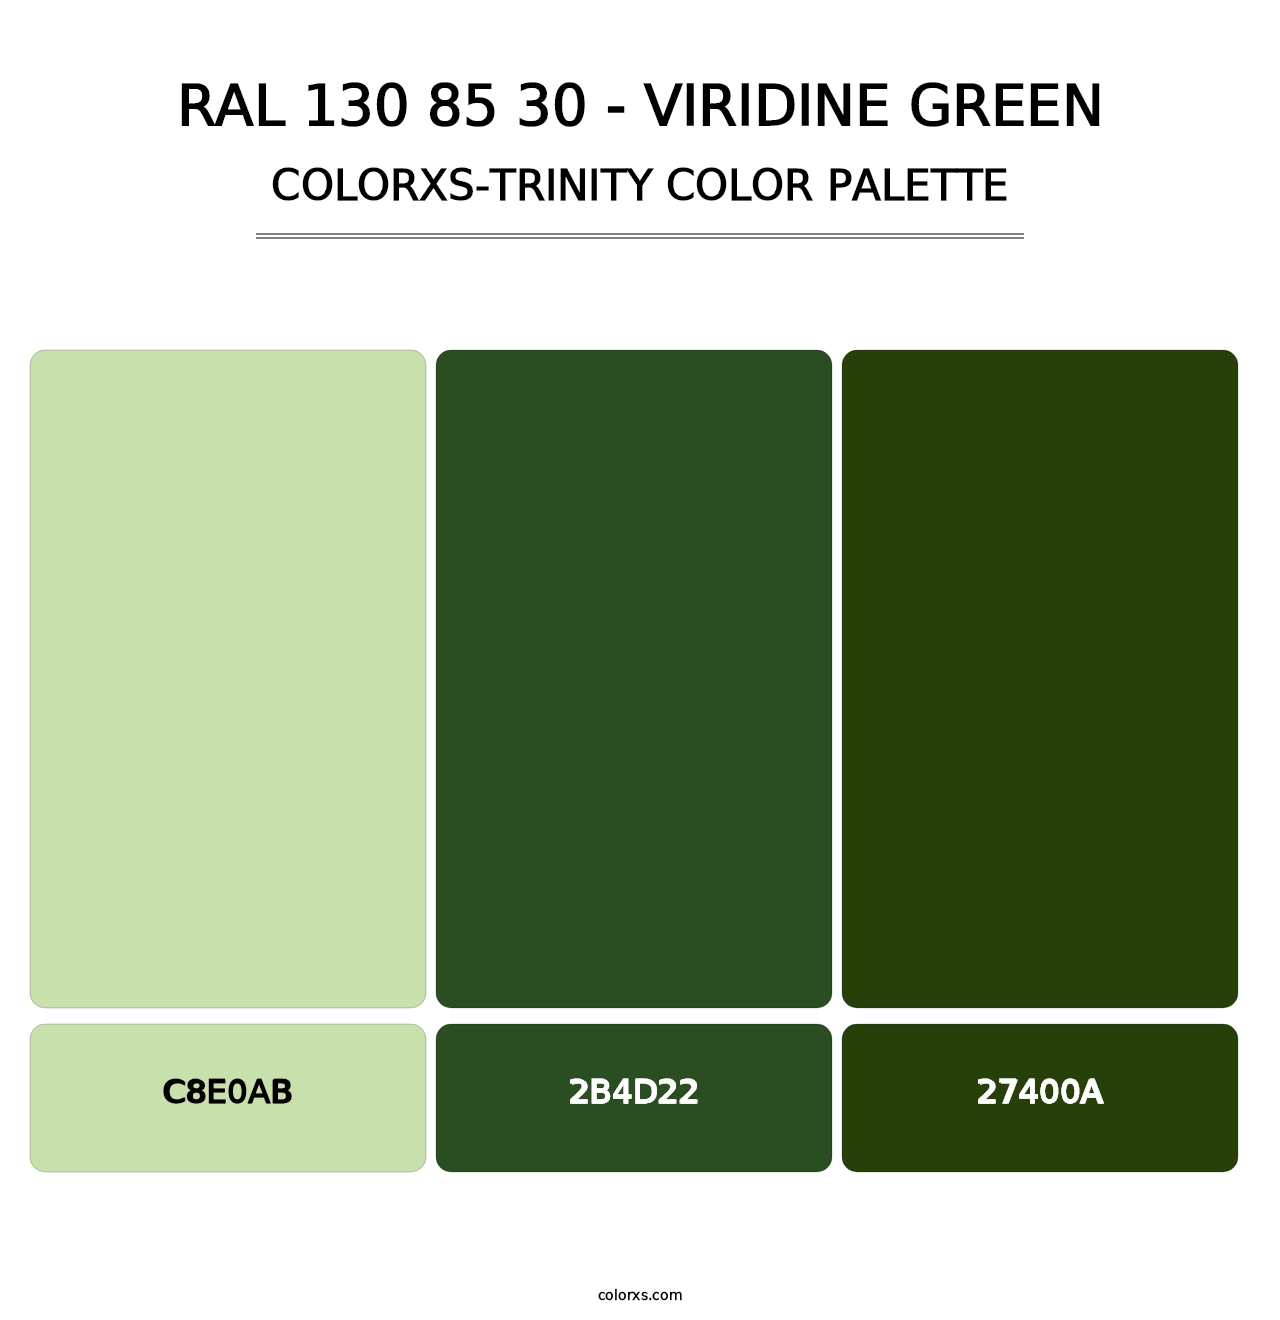 RAL 130 85 30 - Viridine Green - Colorxs Trinity Palette